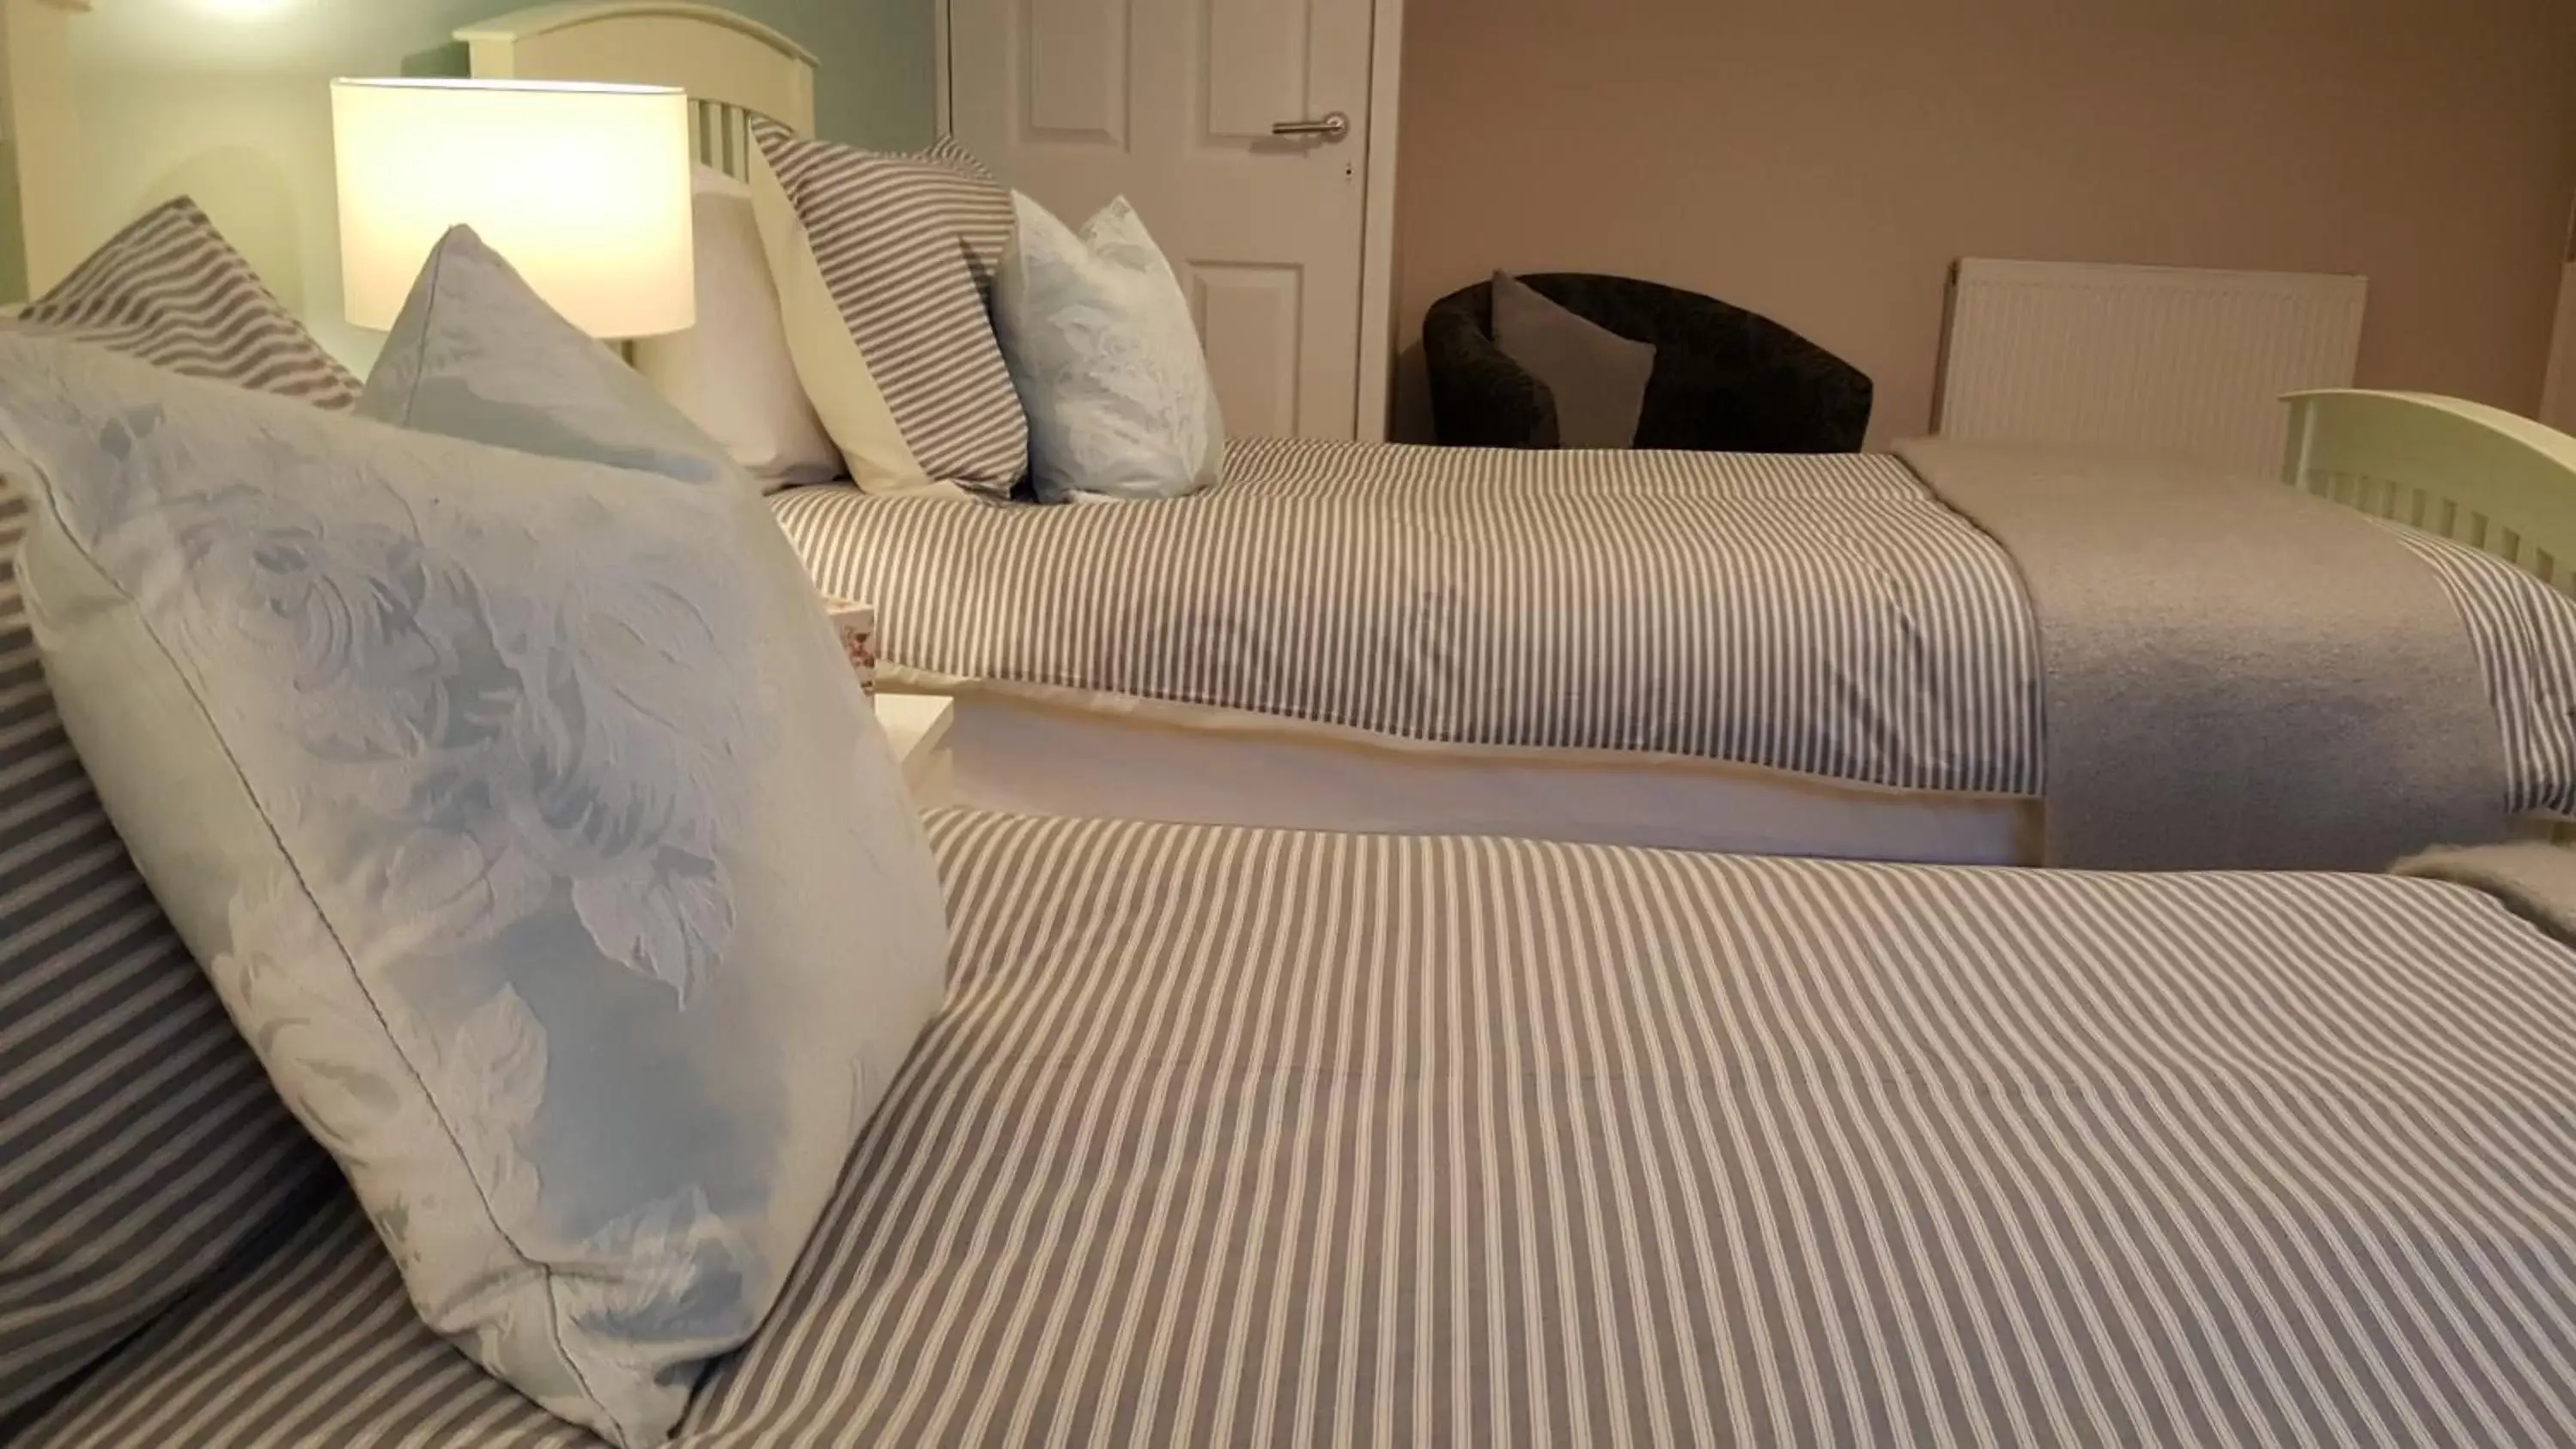 Bed, Room Photo in Crofthead Farm House